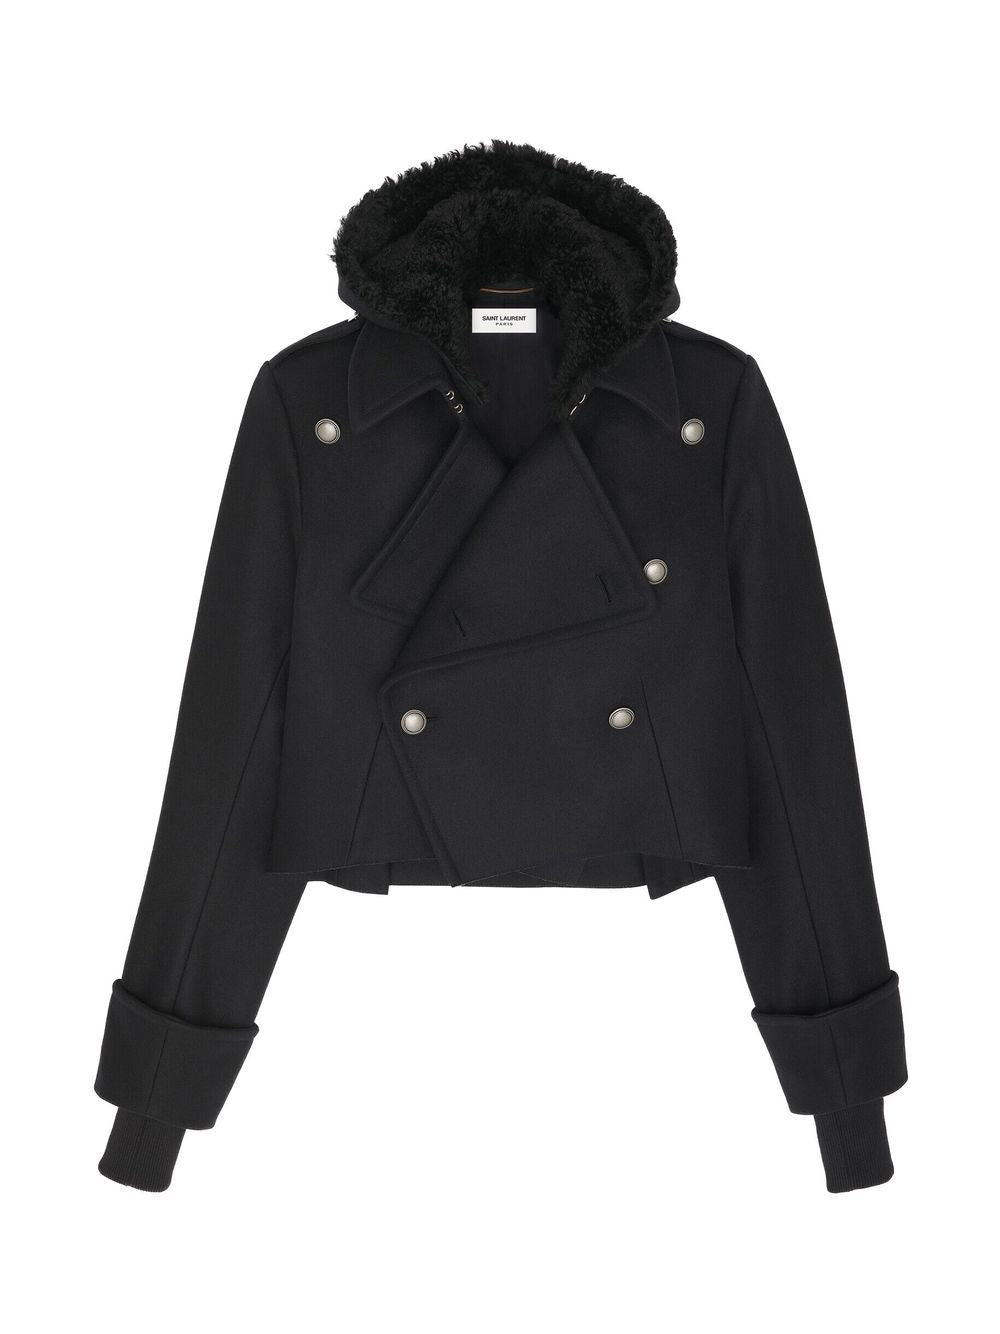 SAINT LAURENT Classic Black Wool and Silk Detachable Hood Jacket for Women